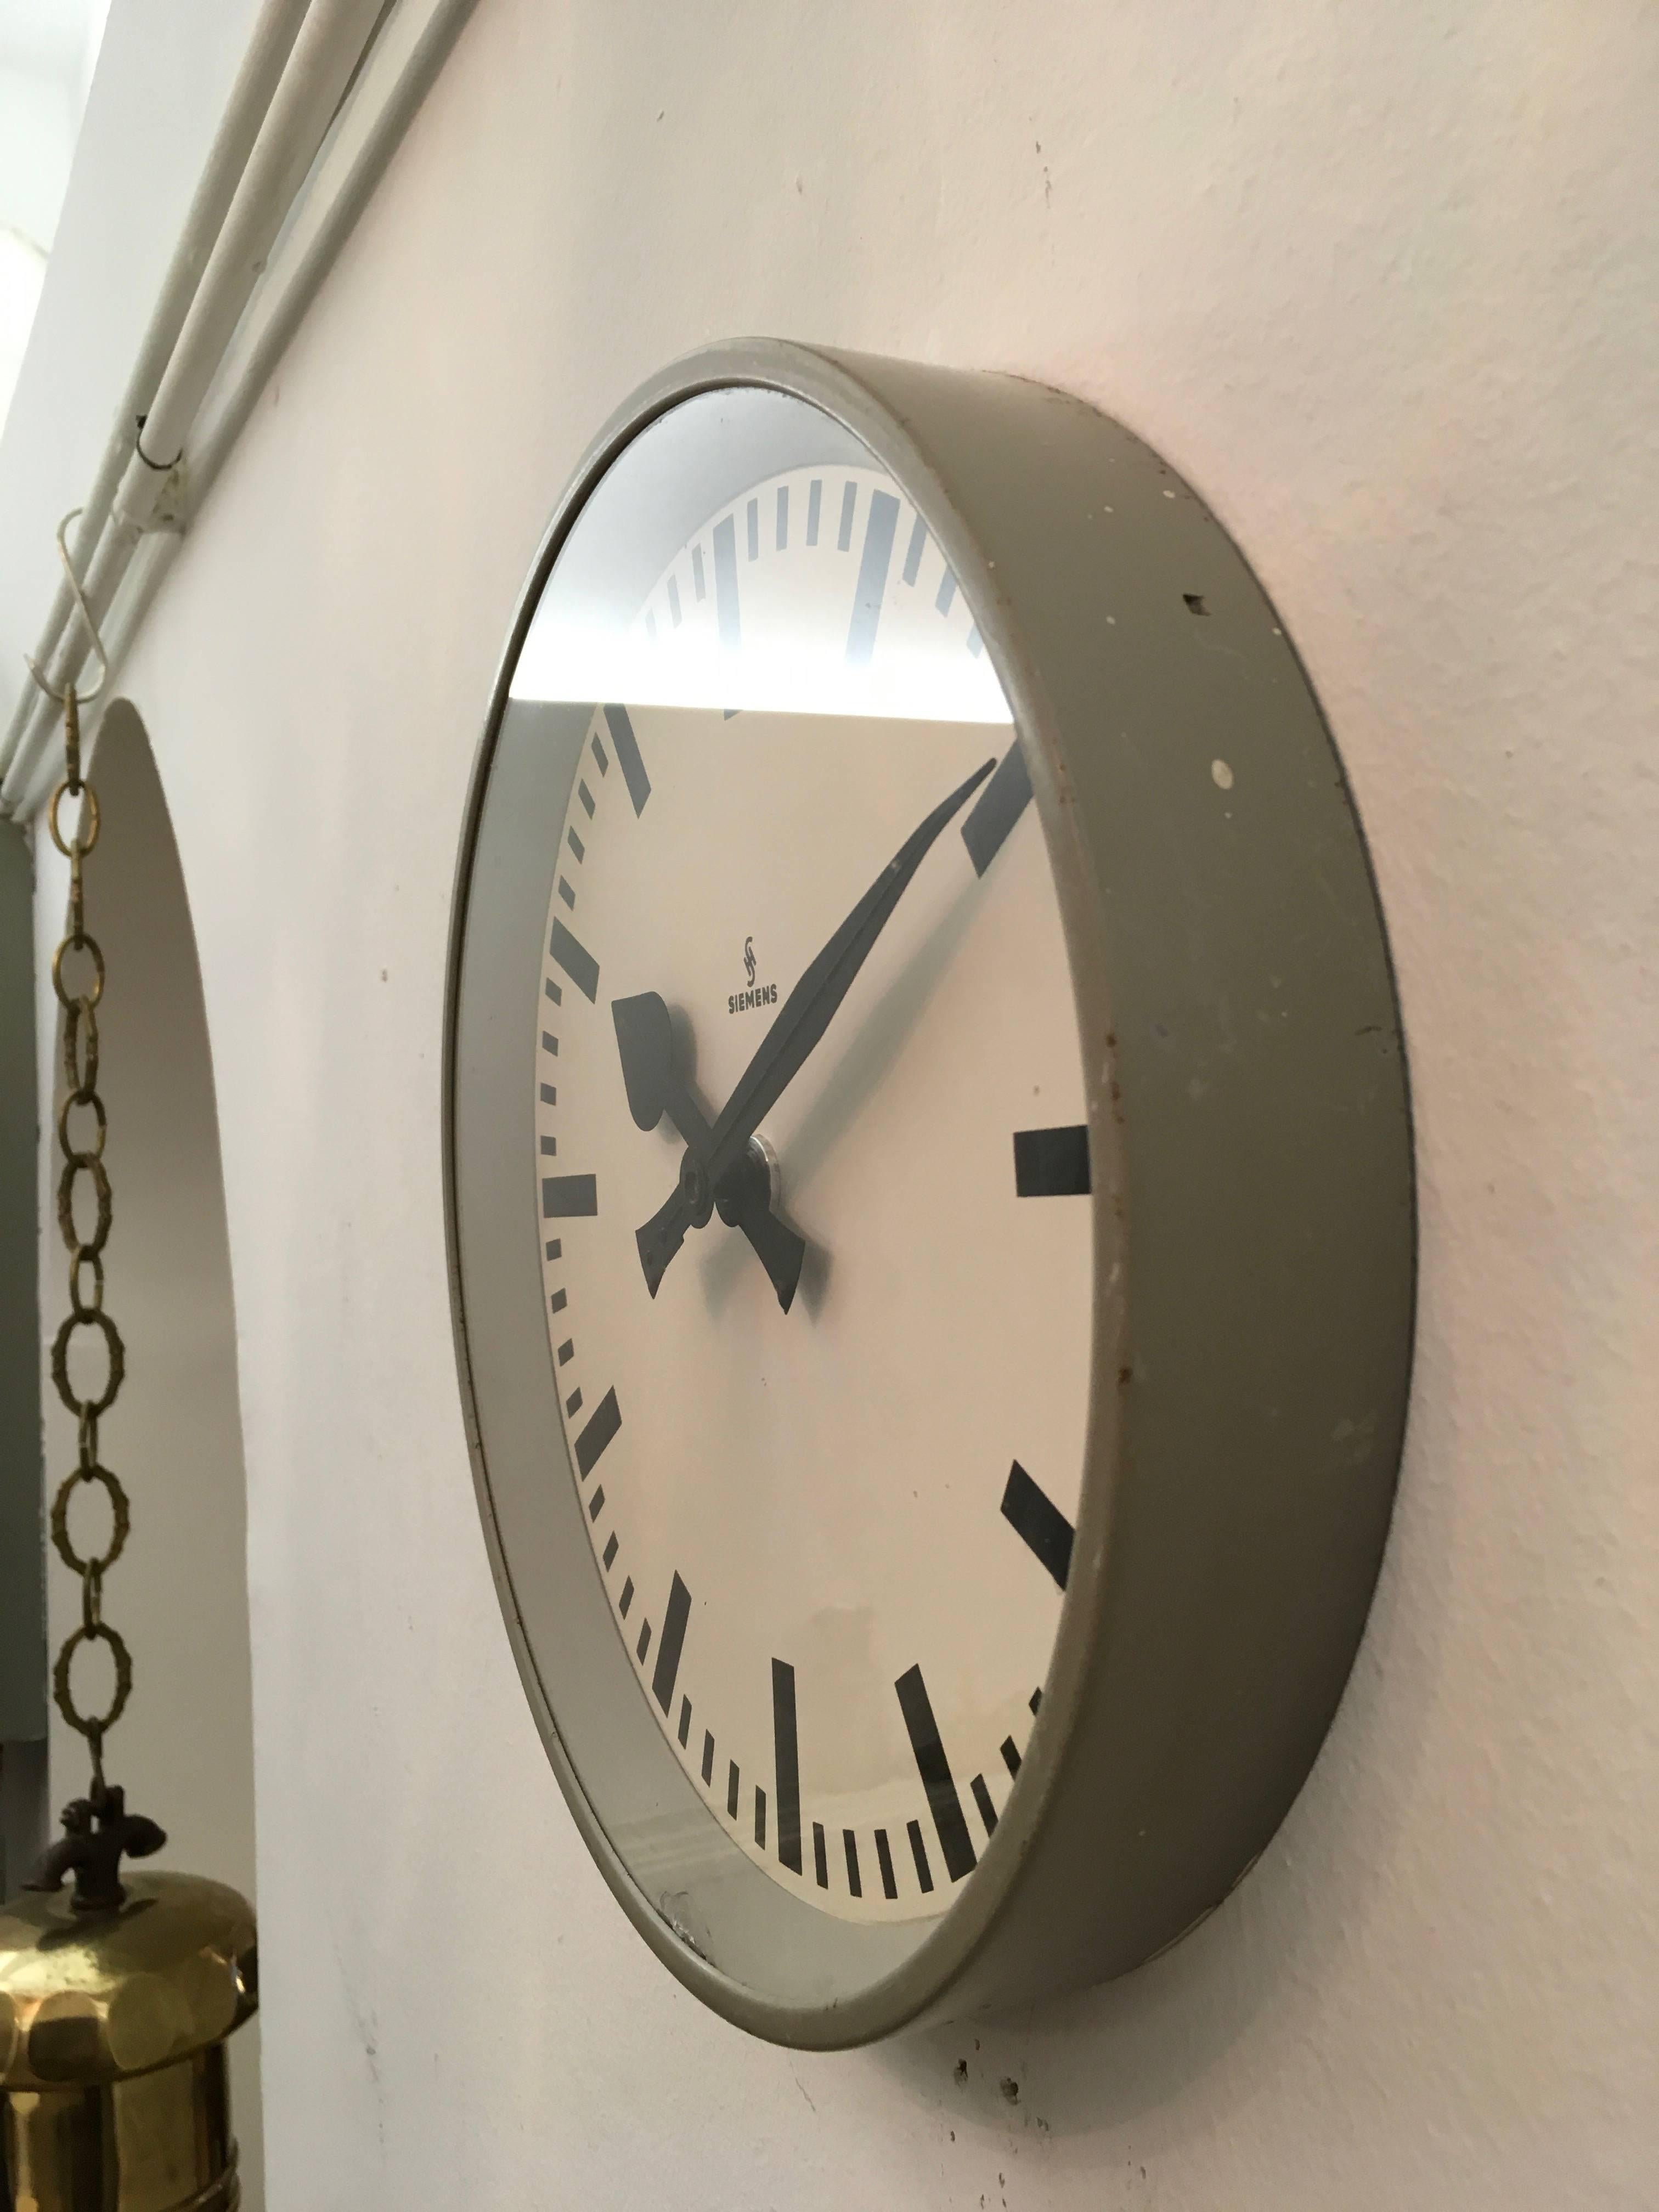 Mid-20th Century Siemens Factory or Workshop Wall Clock